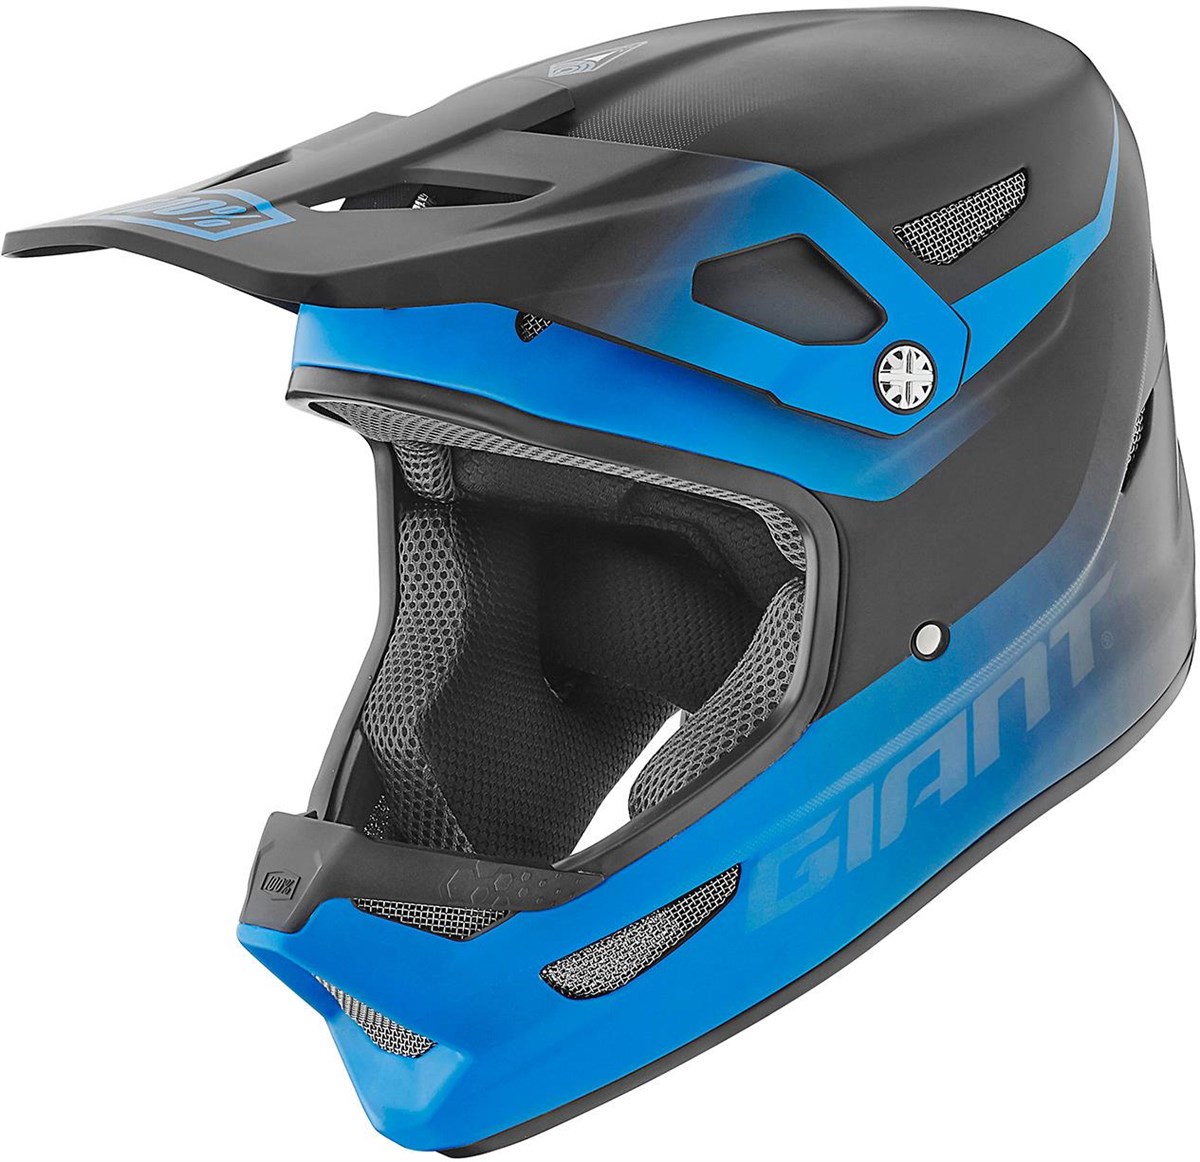 Giant 100% Status DH MTB Full Face Helmet product image